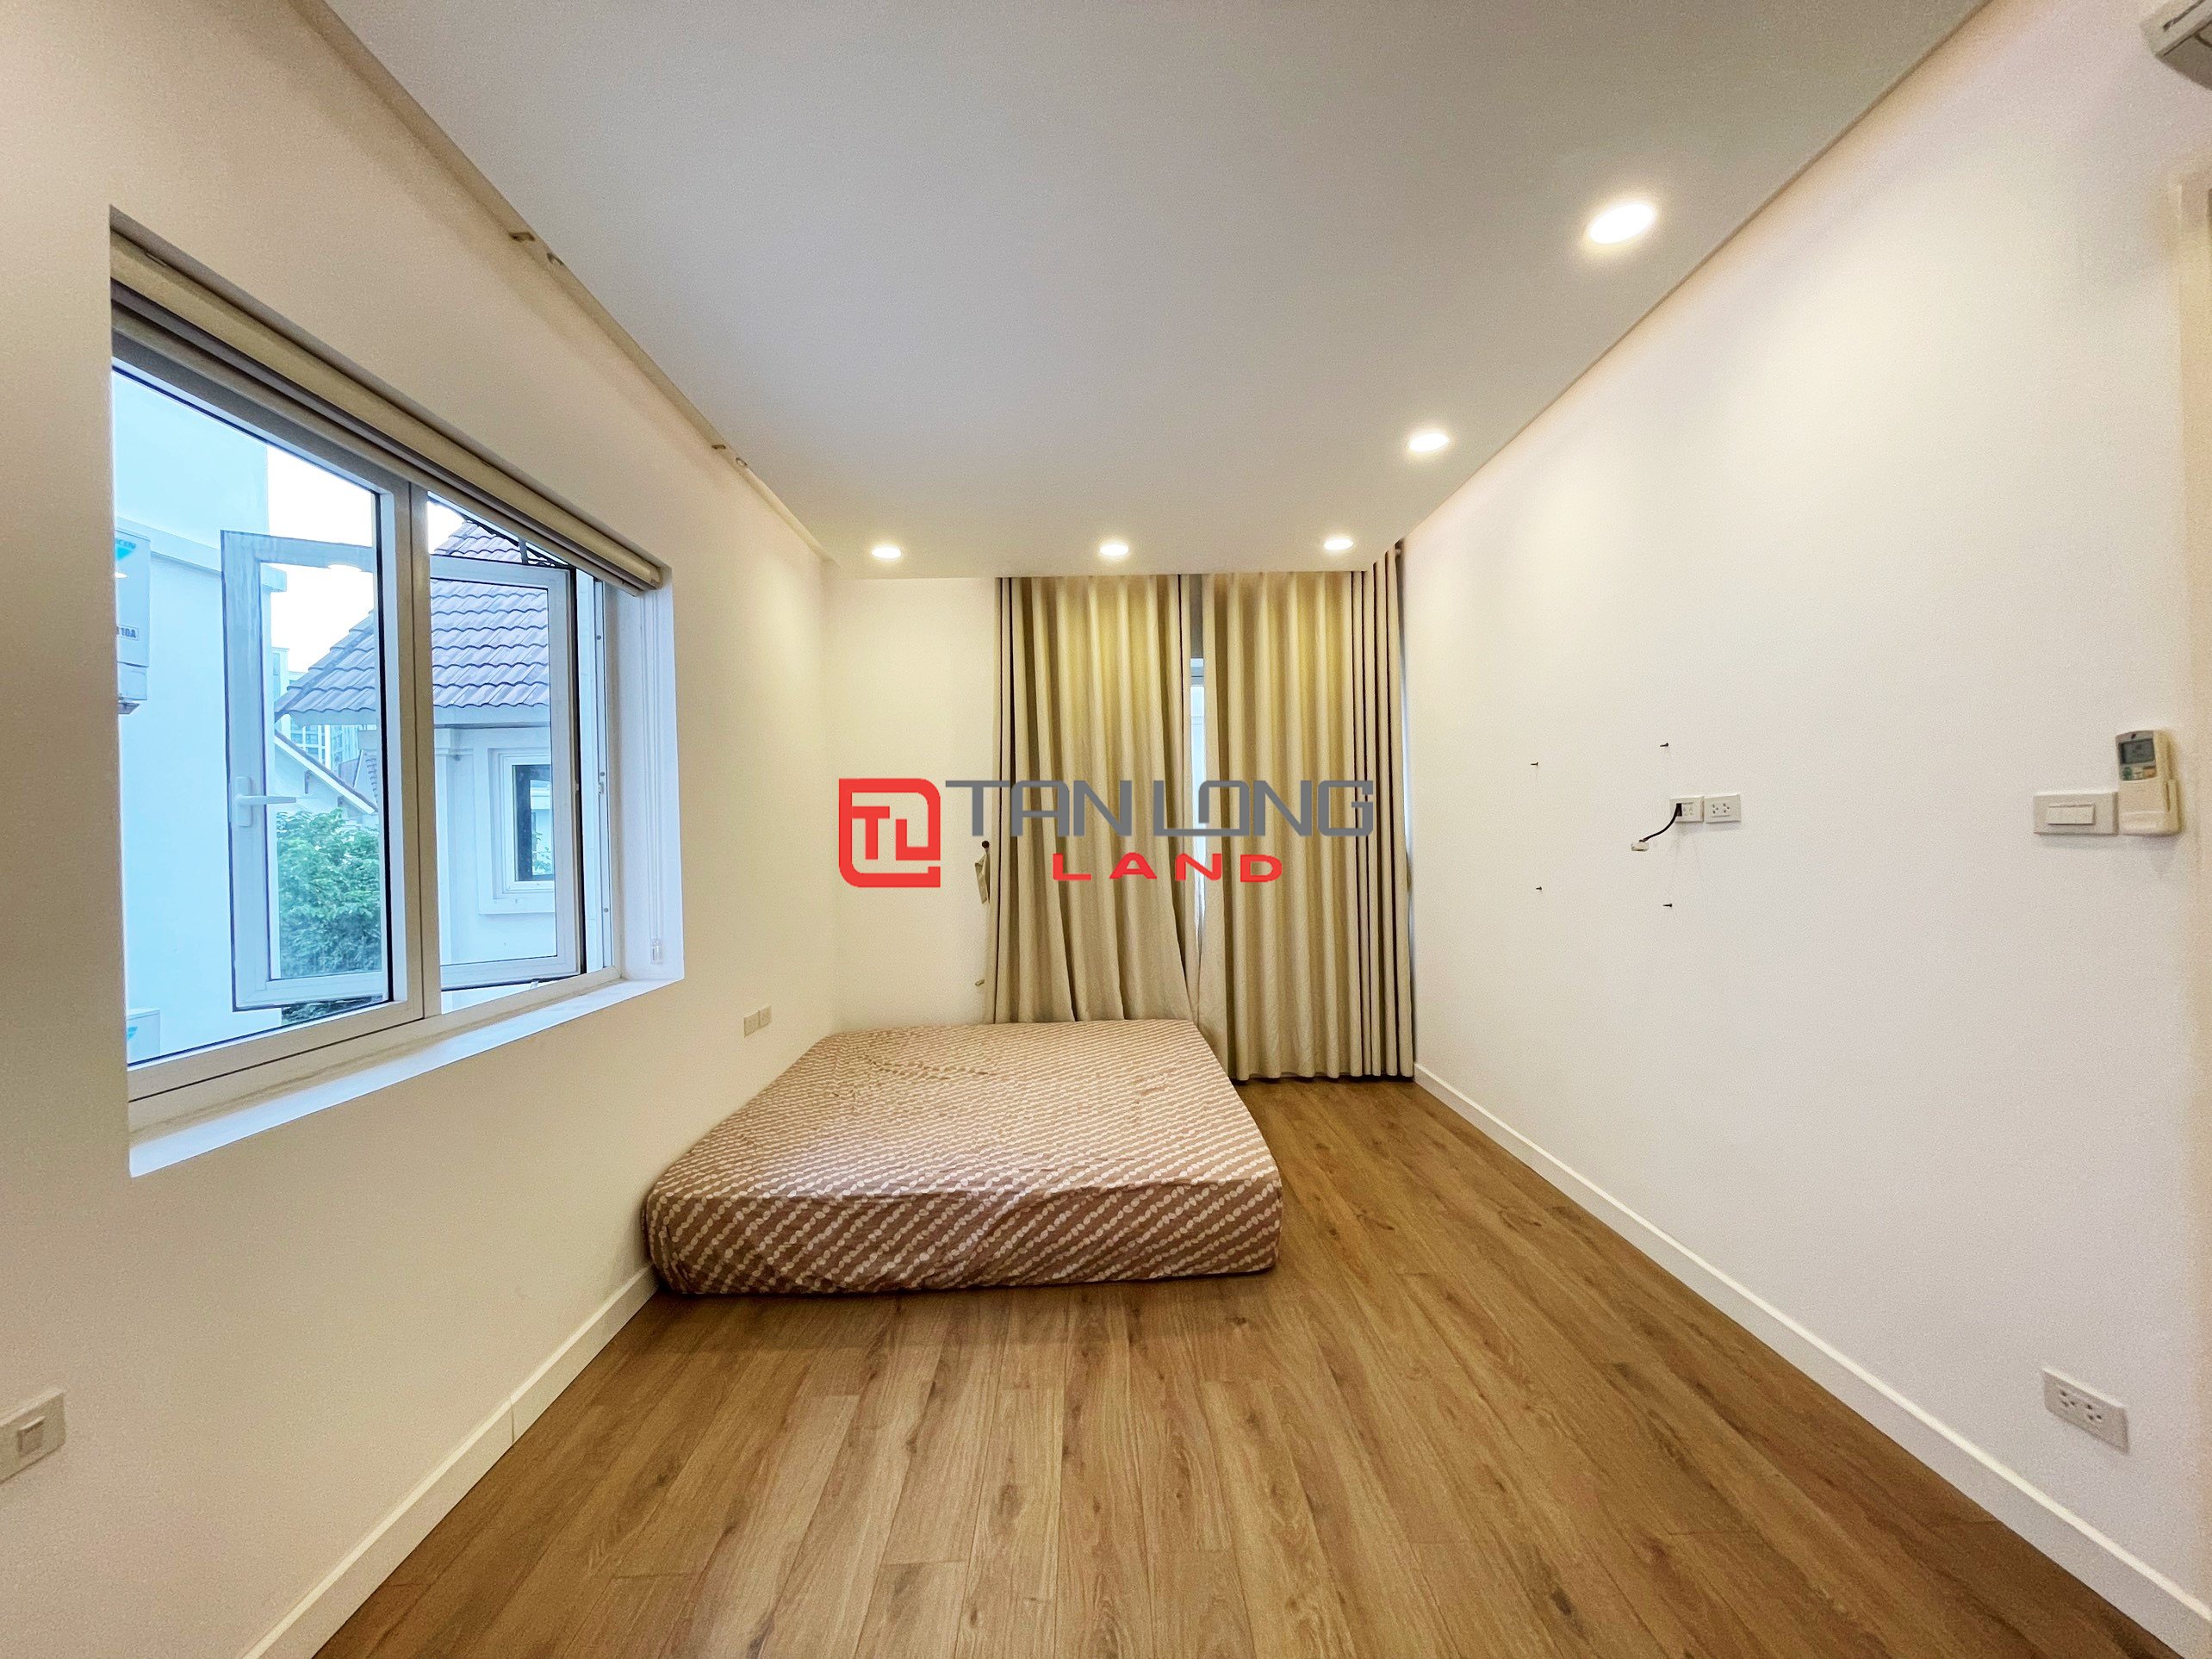 Duplex Villa for rent with Full Furniture Cheap Price in Vinhomes Riverside Long Bien 8